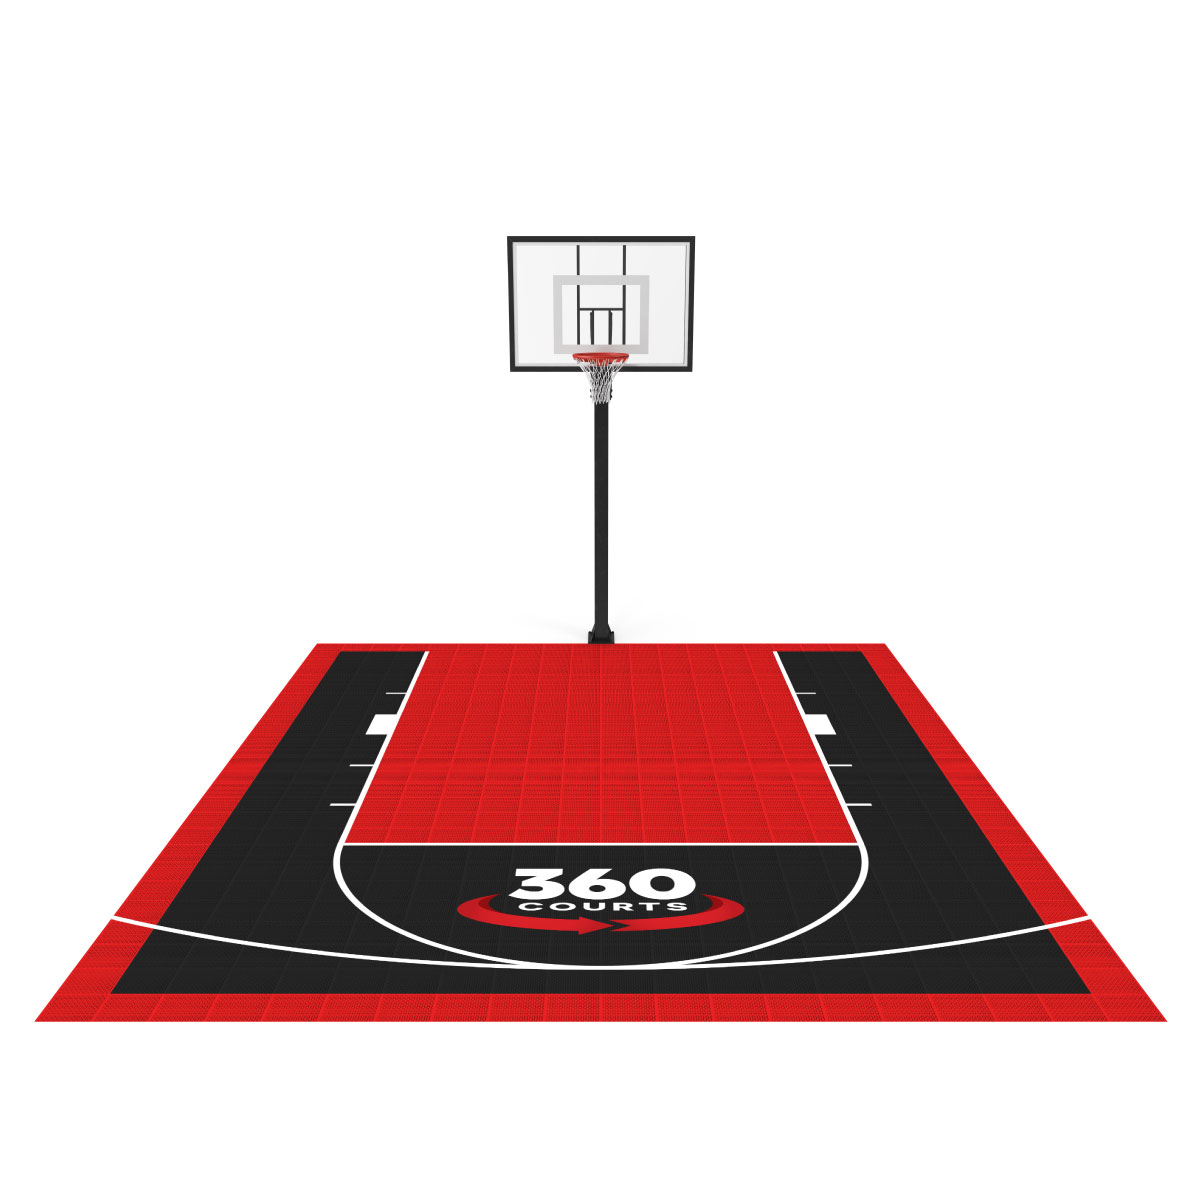 *Basketball Half Court 360 Courts Canada